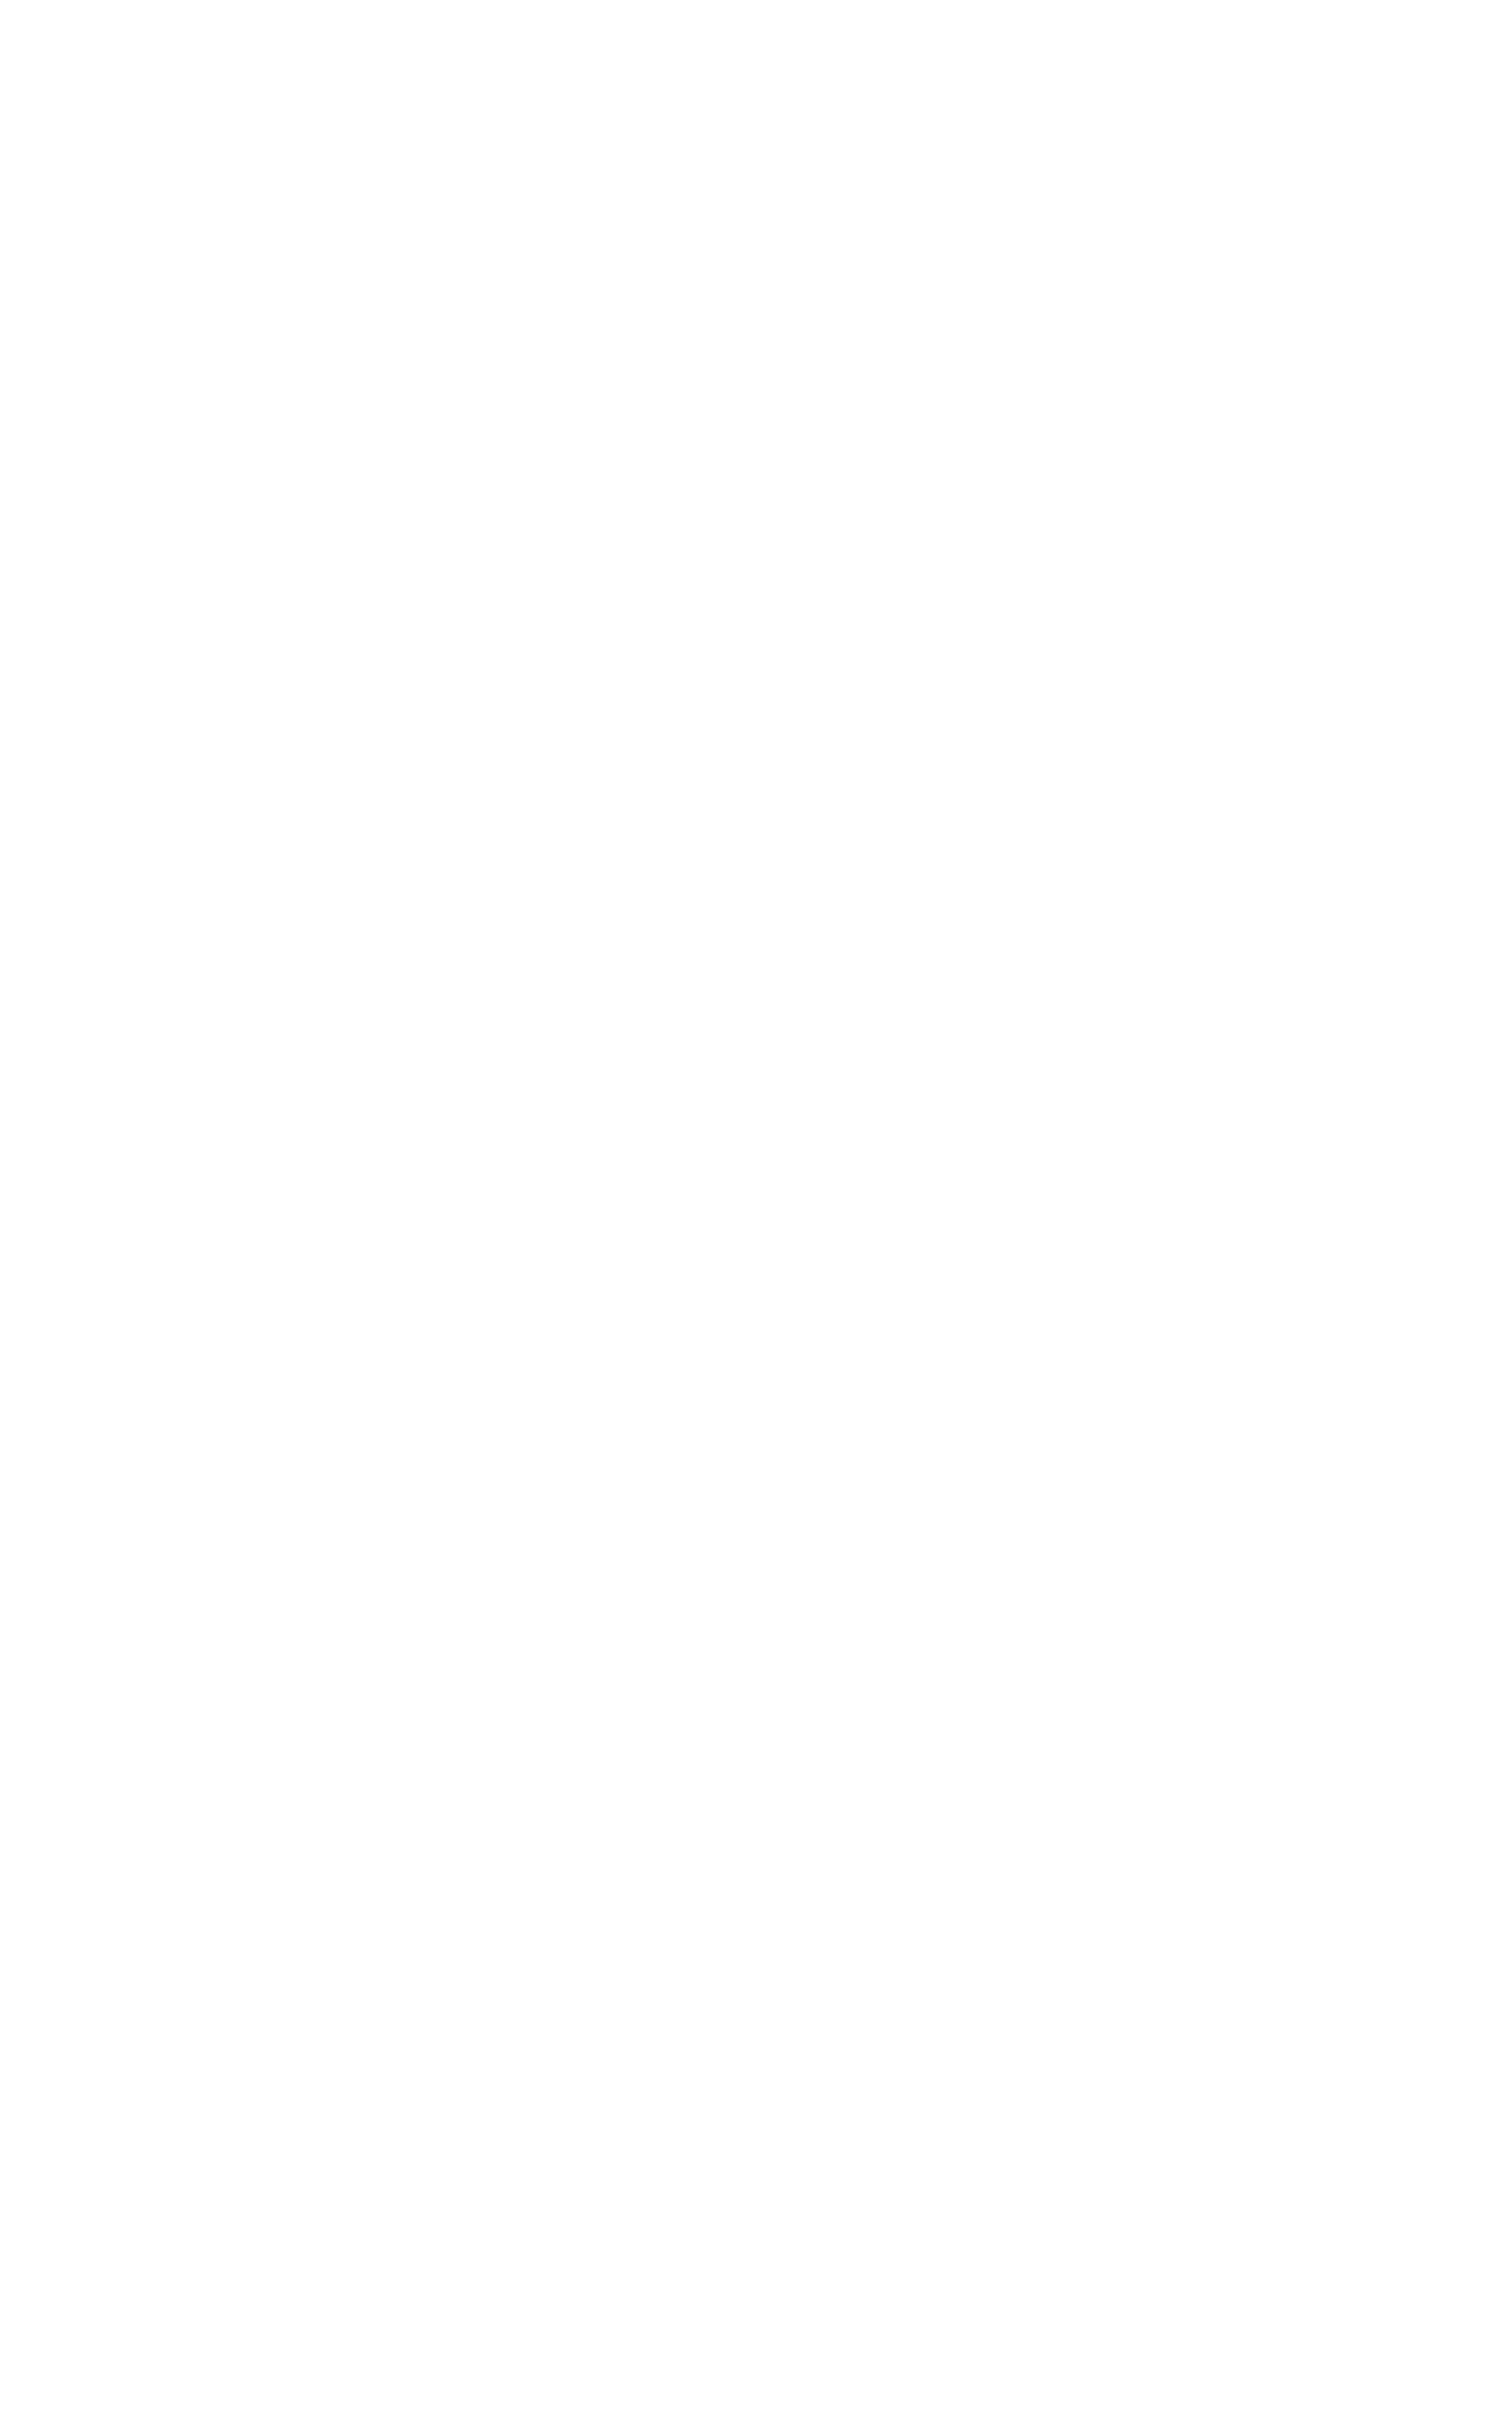 digital illustration of a bat